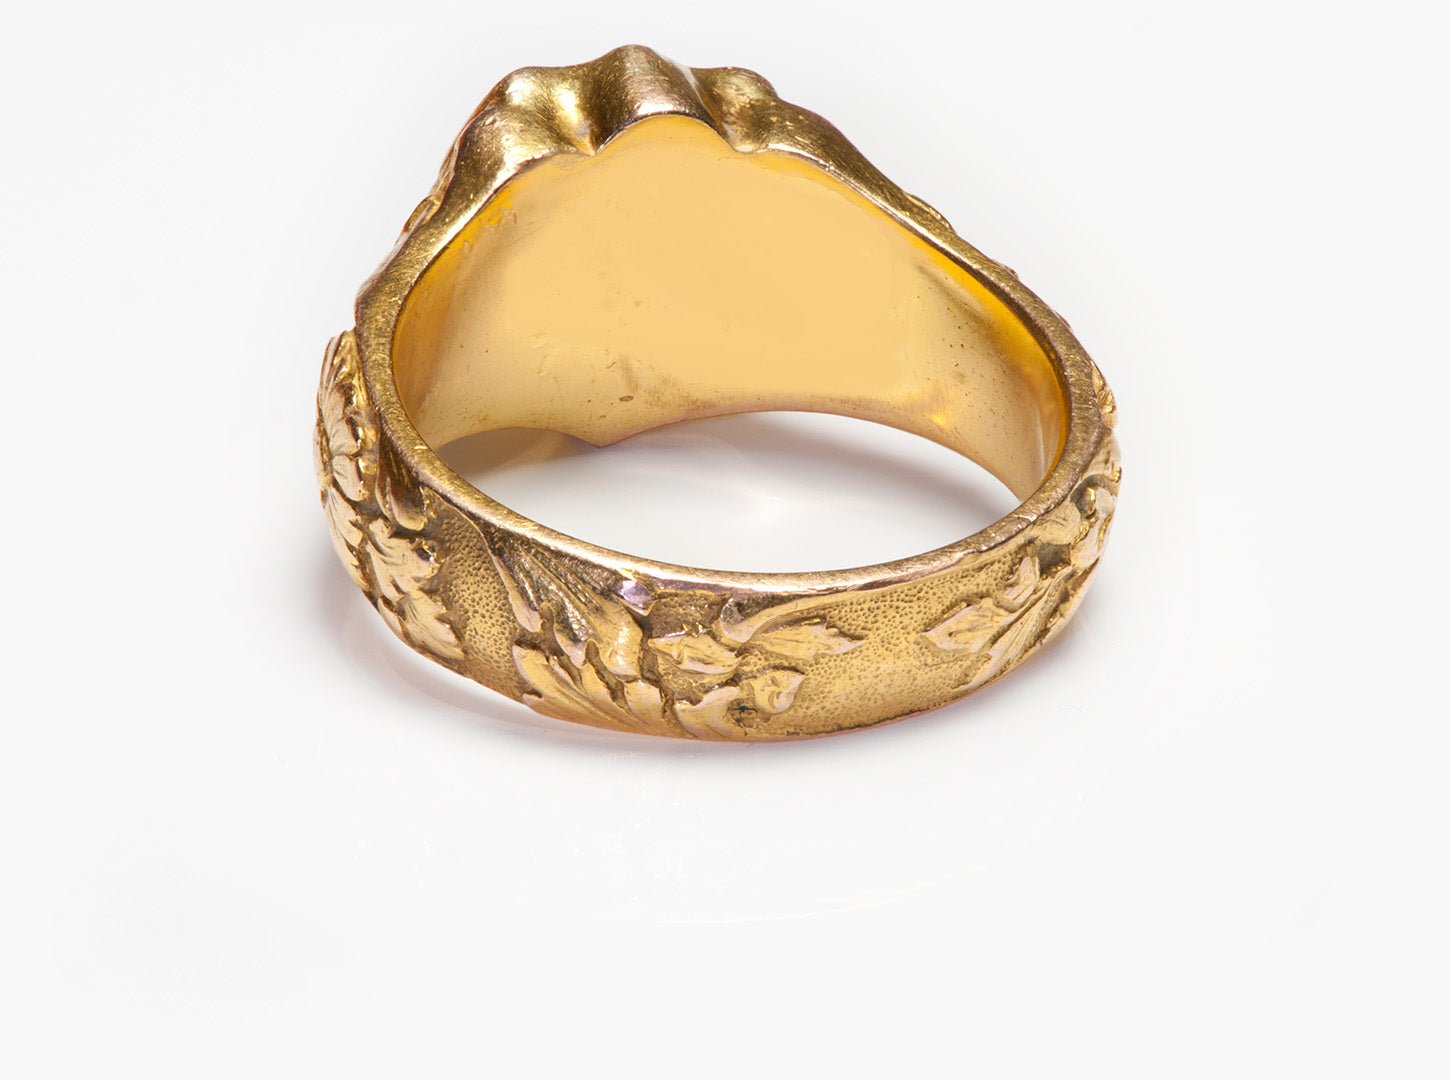 Exquisite Antique Gustav Manz 18K Gold Shield Agate Intaglio Men's Ring